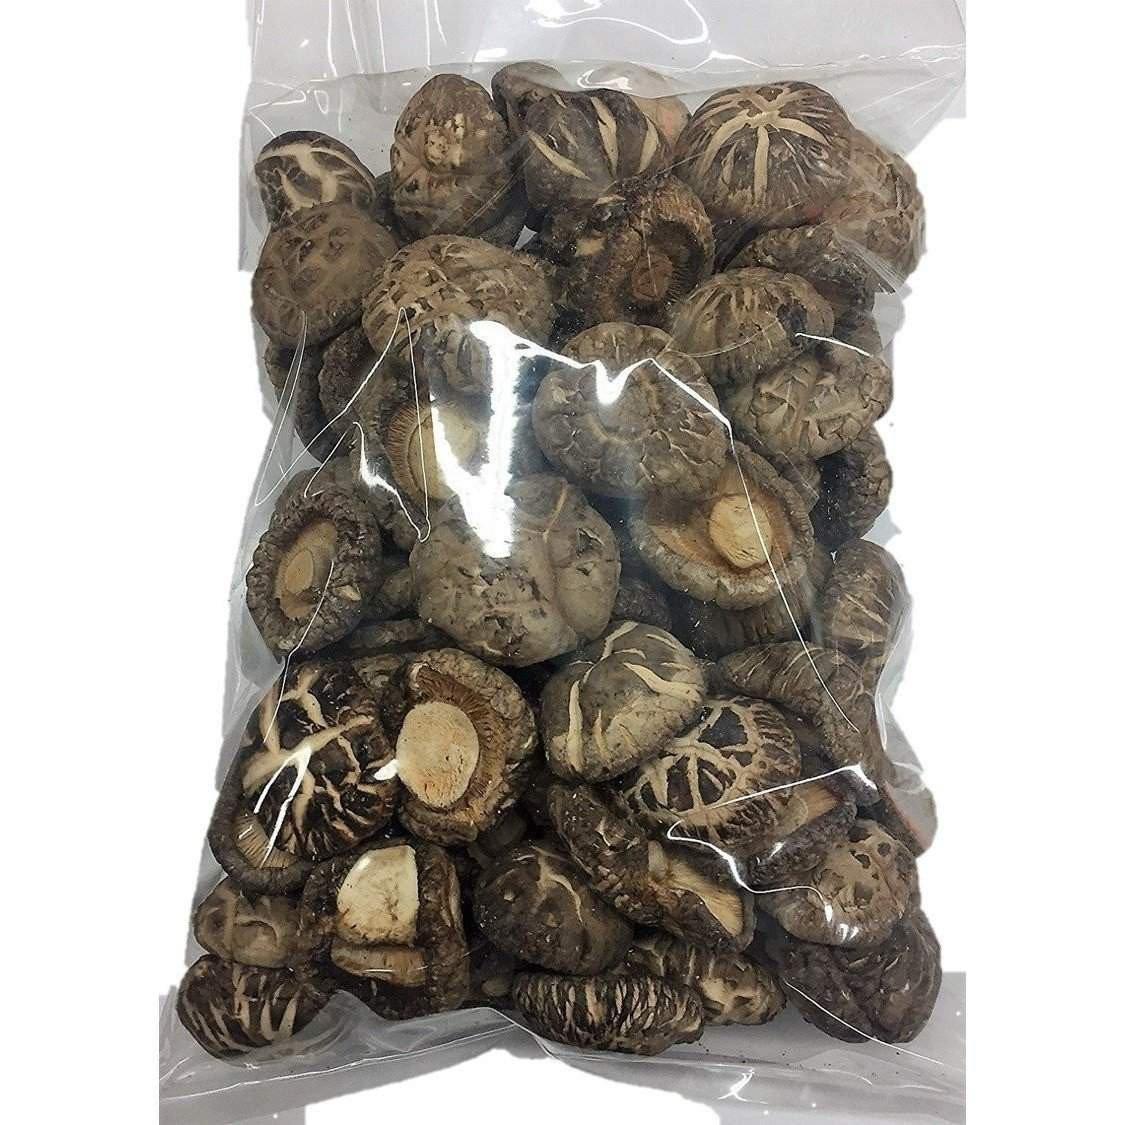 Fresh Shiitake Mushrooms! $12.95/lb – Blues Best Mushrooms